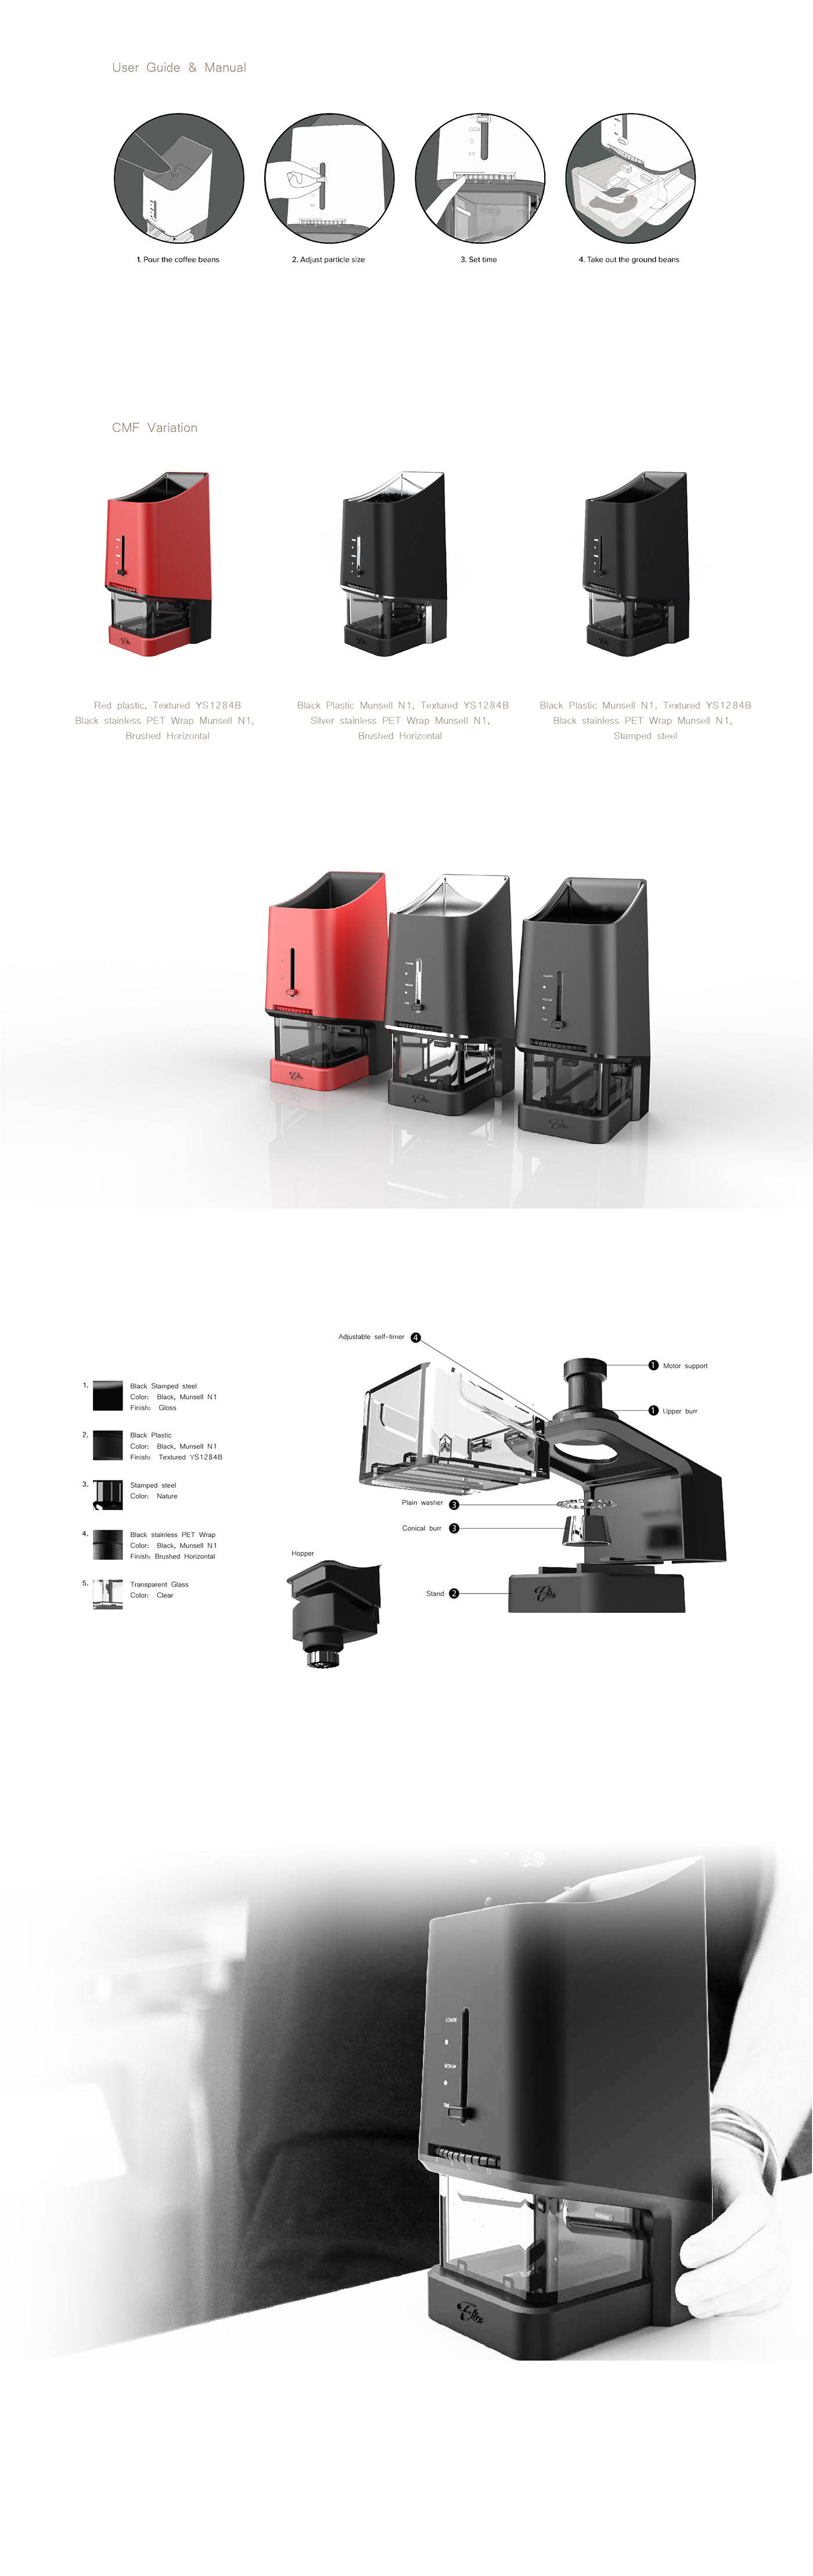 coffee grinder product design  industial design